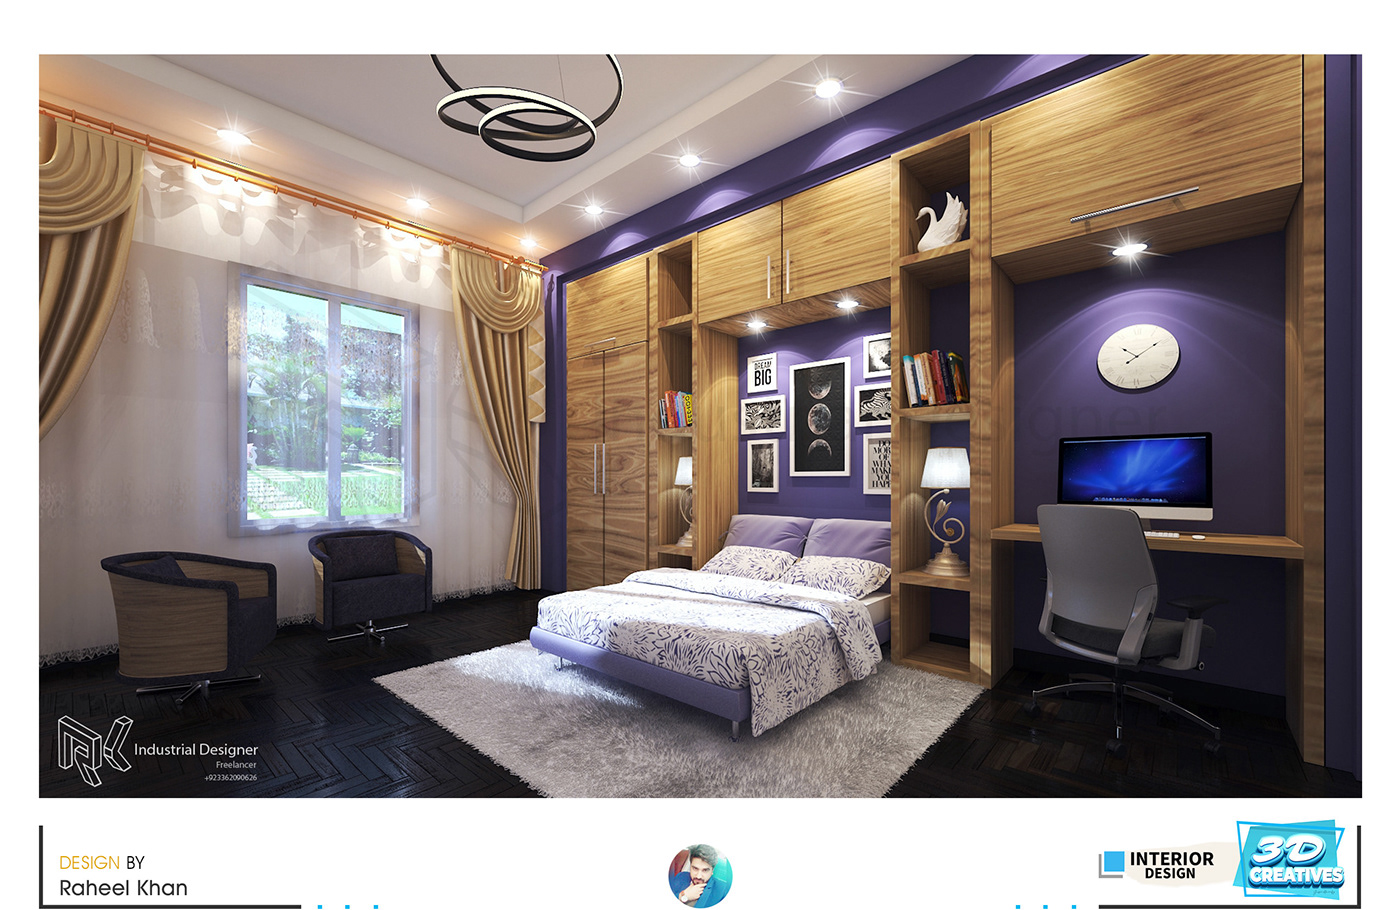 decor designs furniture Interior creatives idesign bedroom livingroom reception YHD